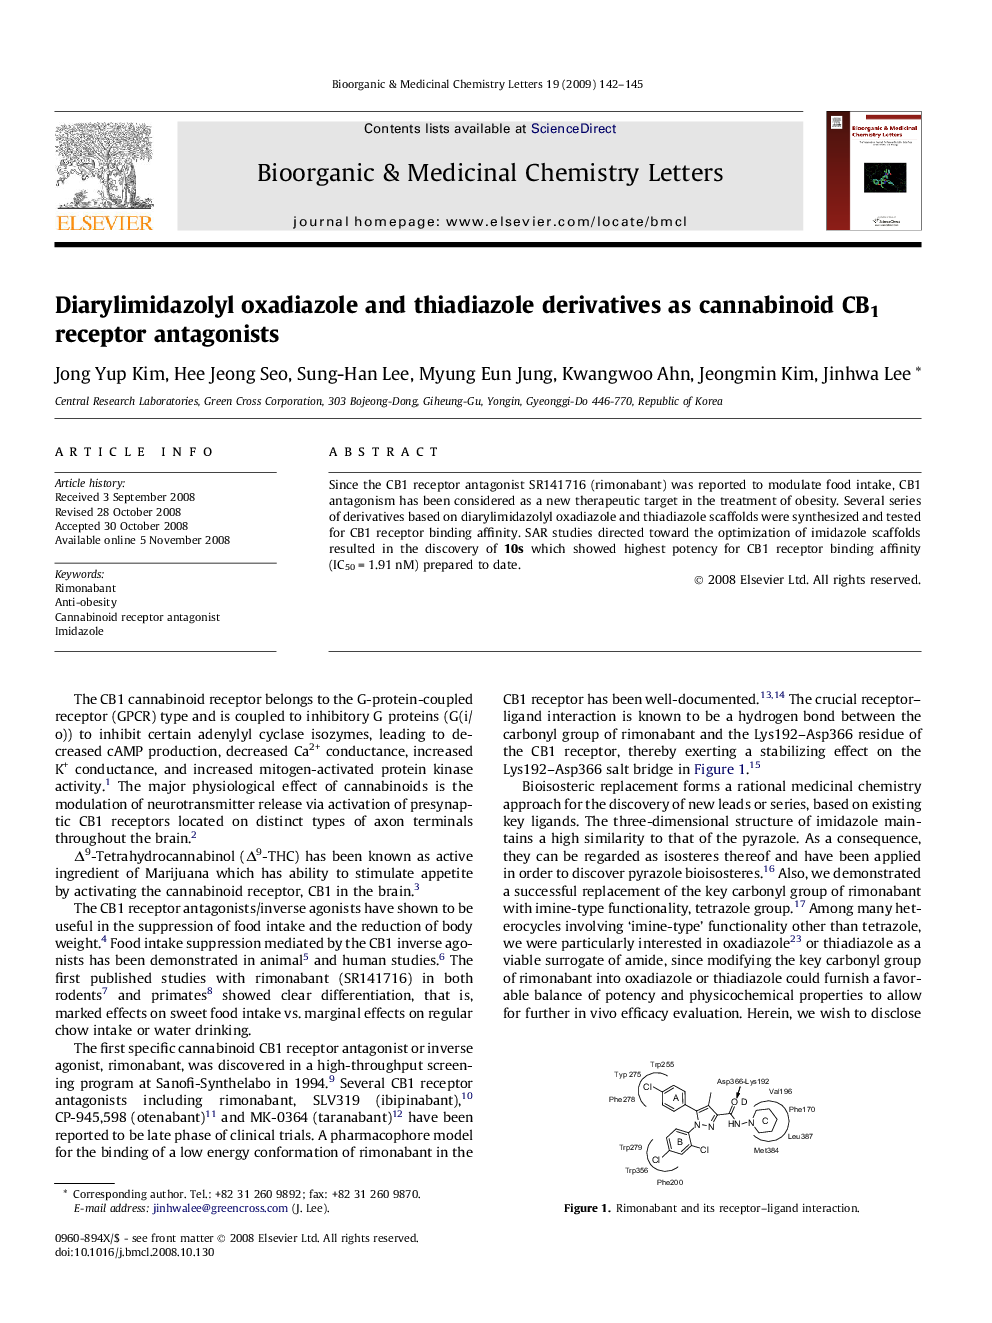 Diarylimidazolyl oxadiazole and thiadiazole derivatives as cannabinoid CB1 receptor antagonists